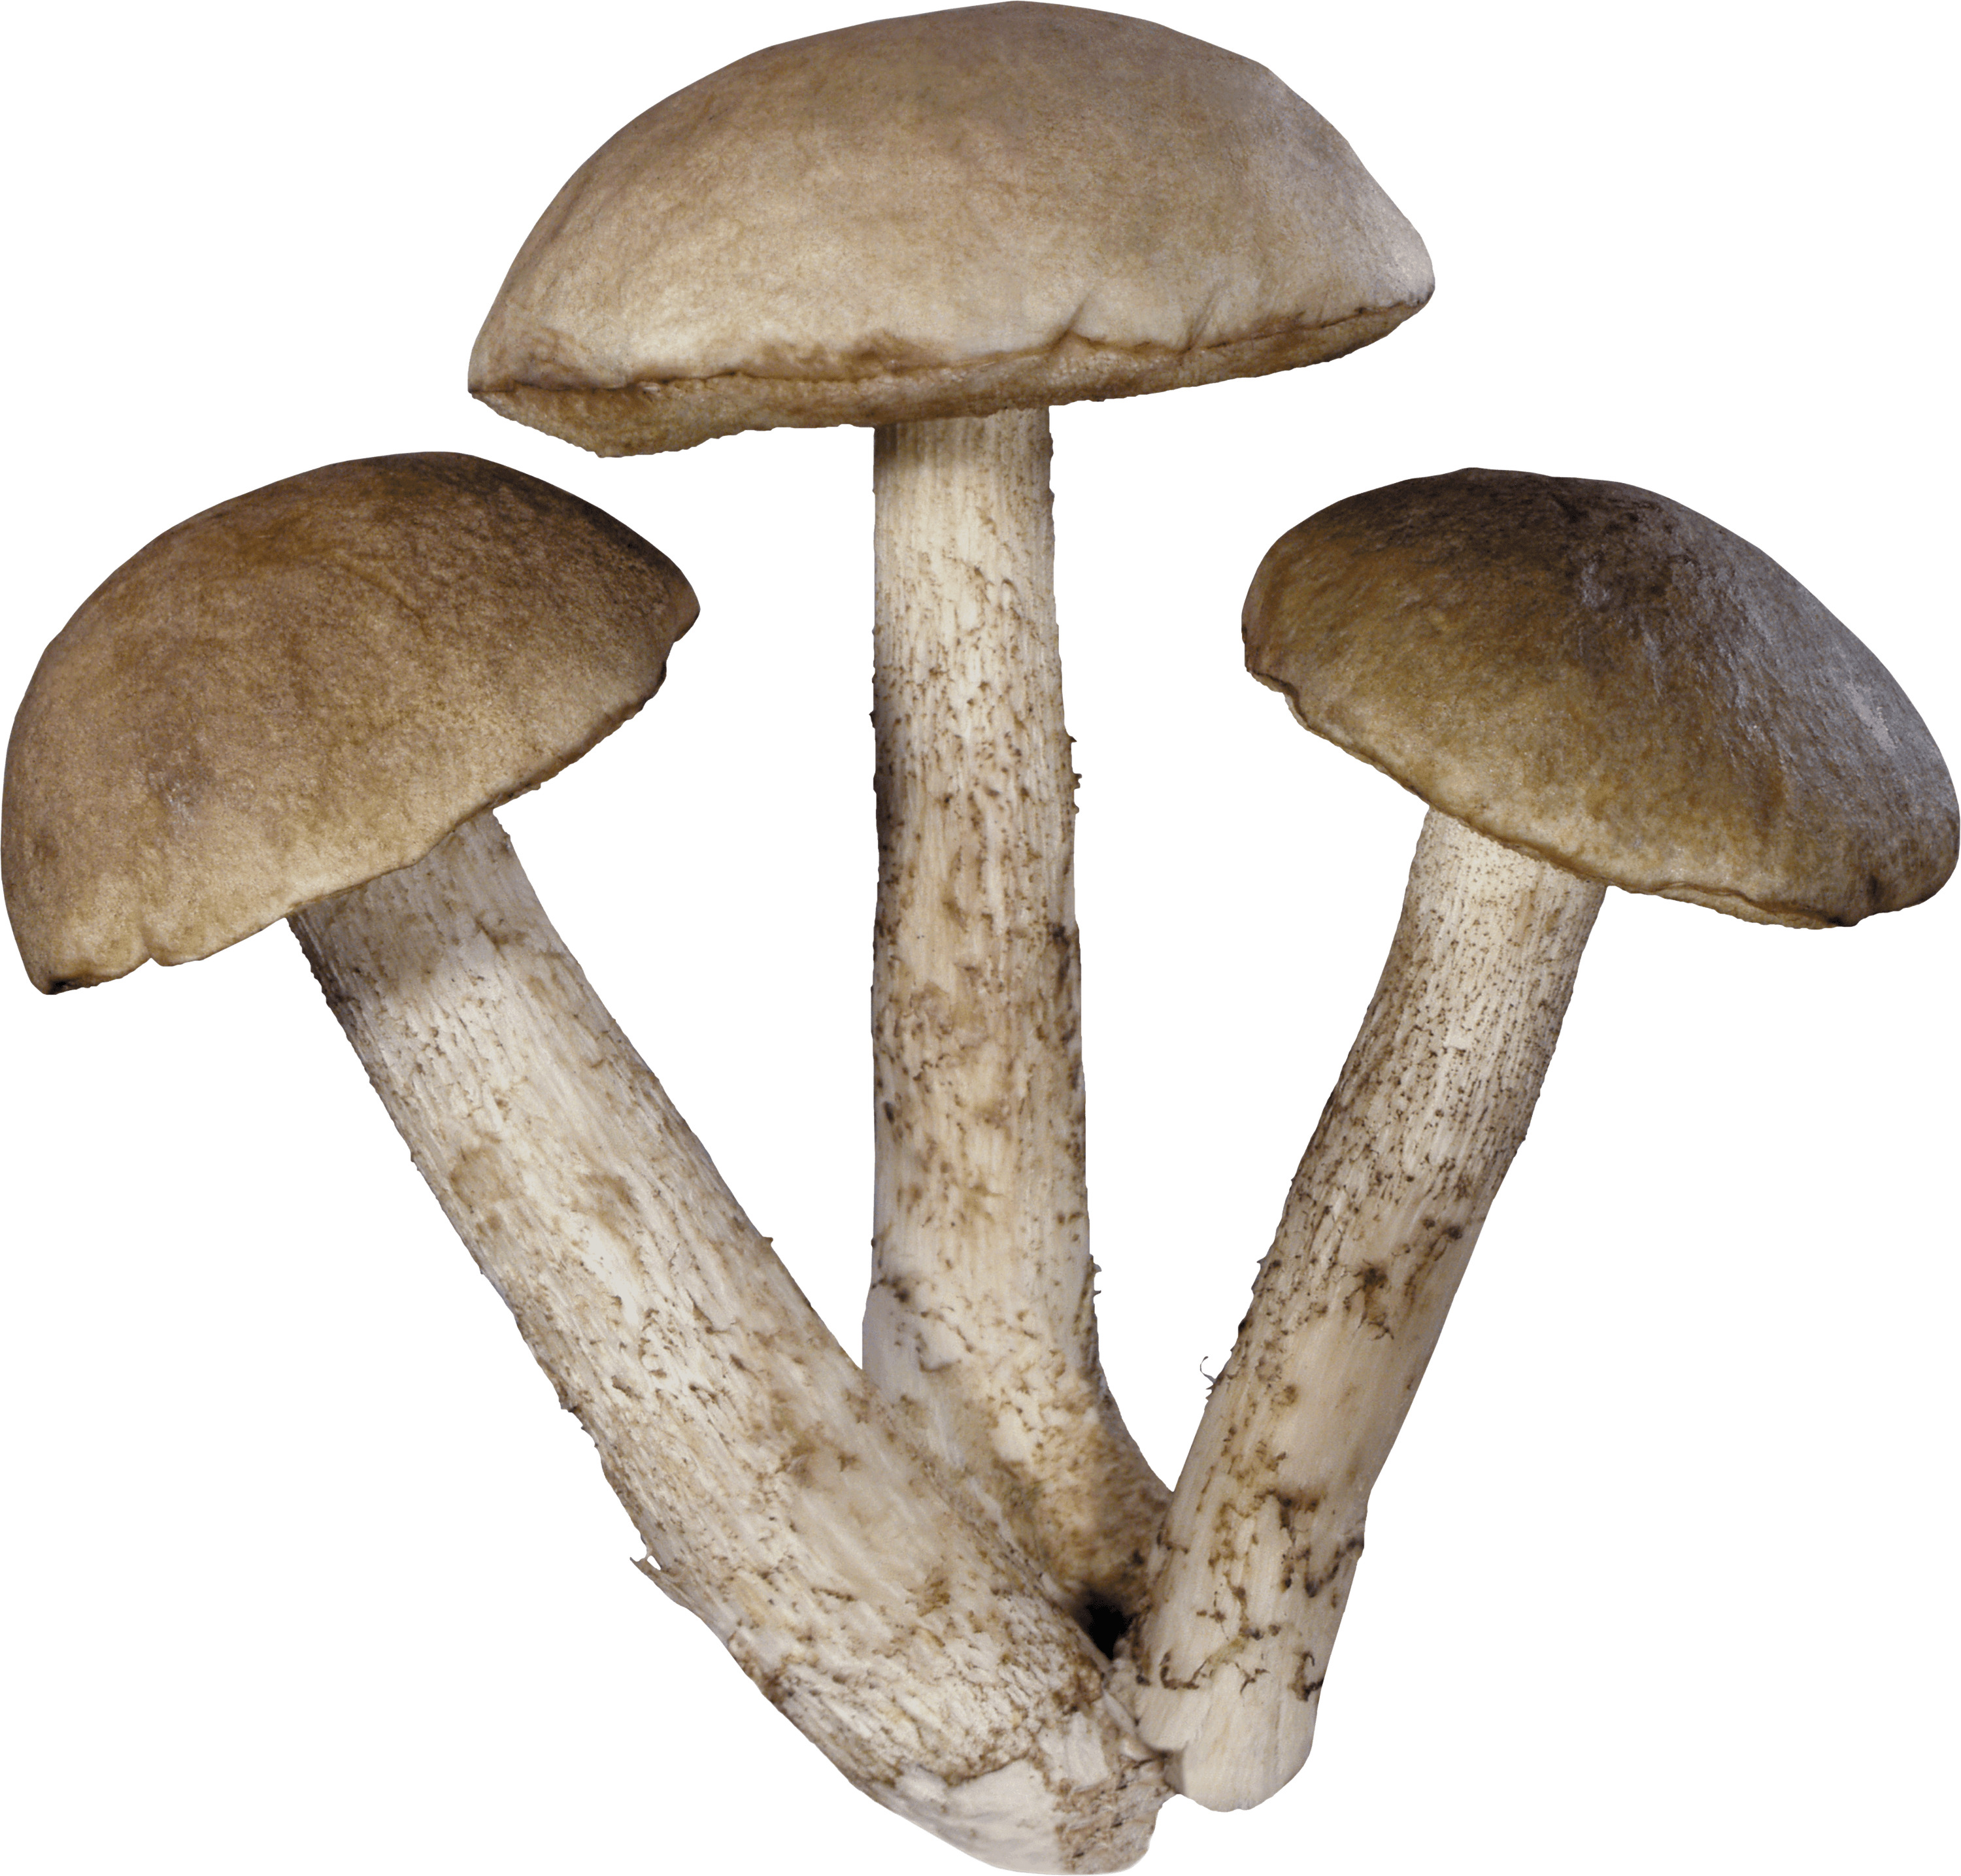 Three Mushrooms icons